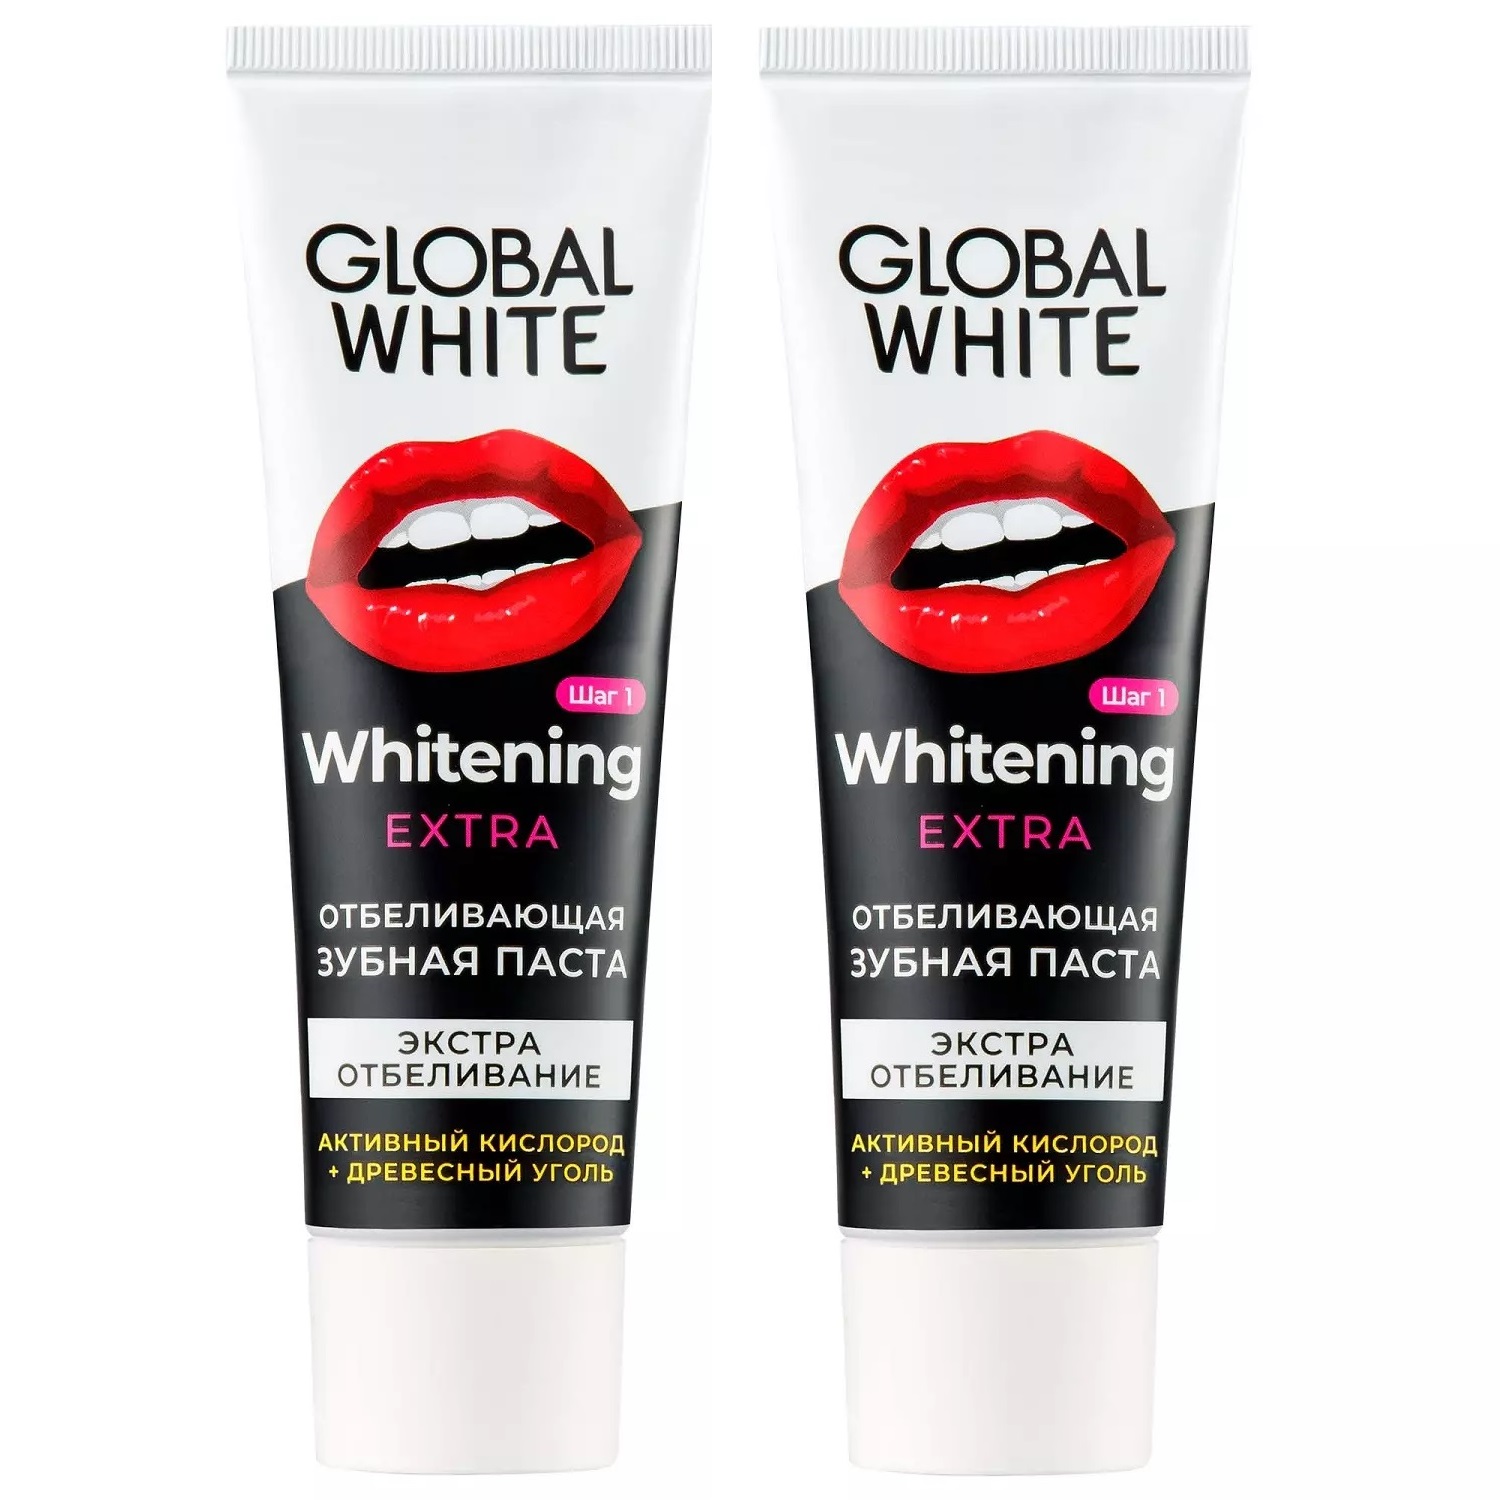 Global White Набор: отбеливающая зубная паста Extra Whitening, 2 х 30 мл (Global White, Подготовка к отбеливанию) зубная паста отбеливающая global white extra whitening 30 мл